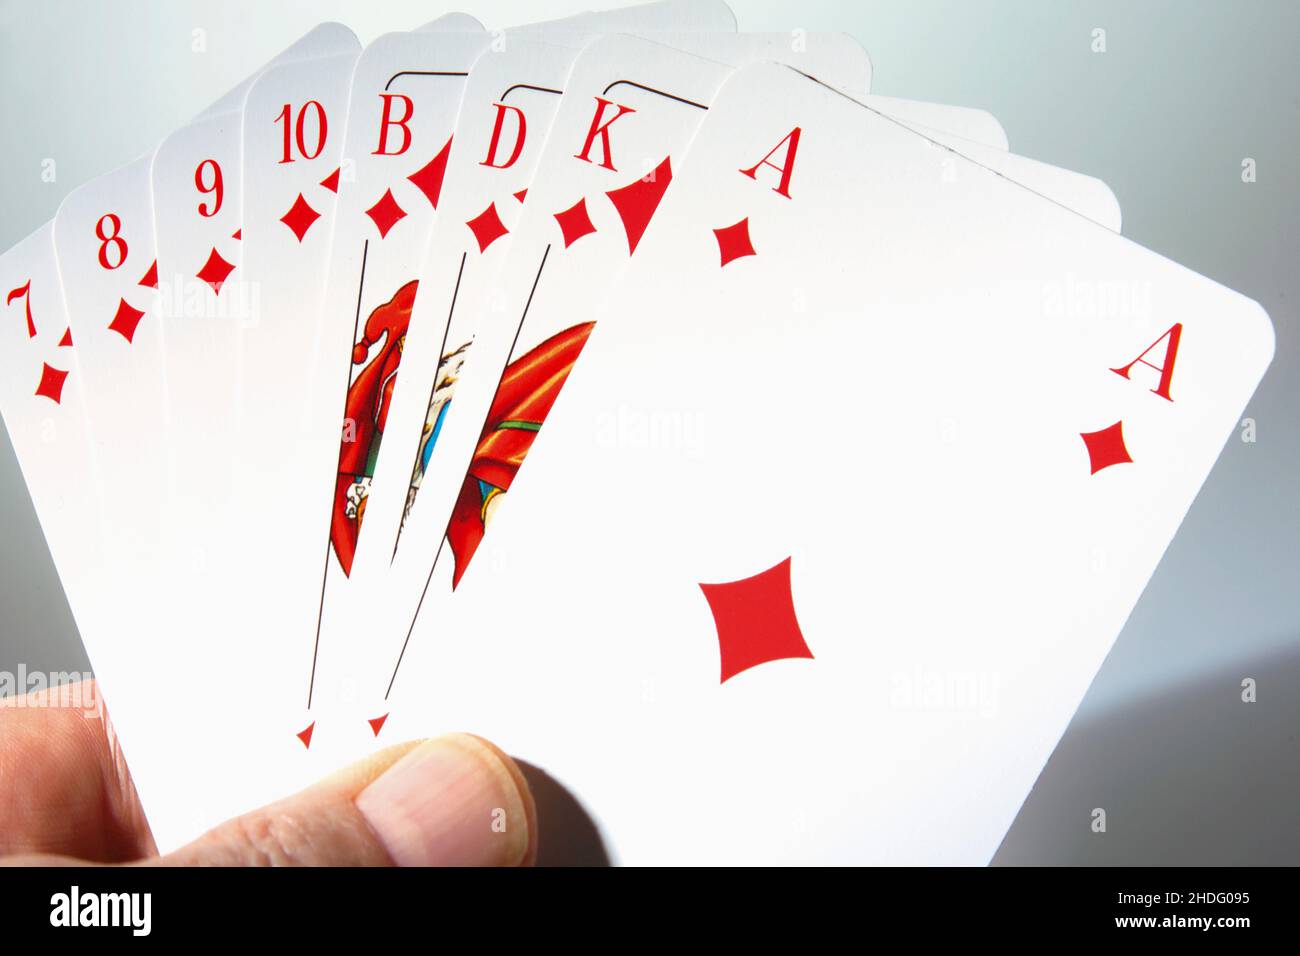 diamond, card game, ranking, diamonds, card games, cards Stock Photo